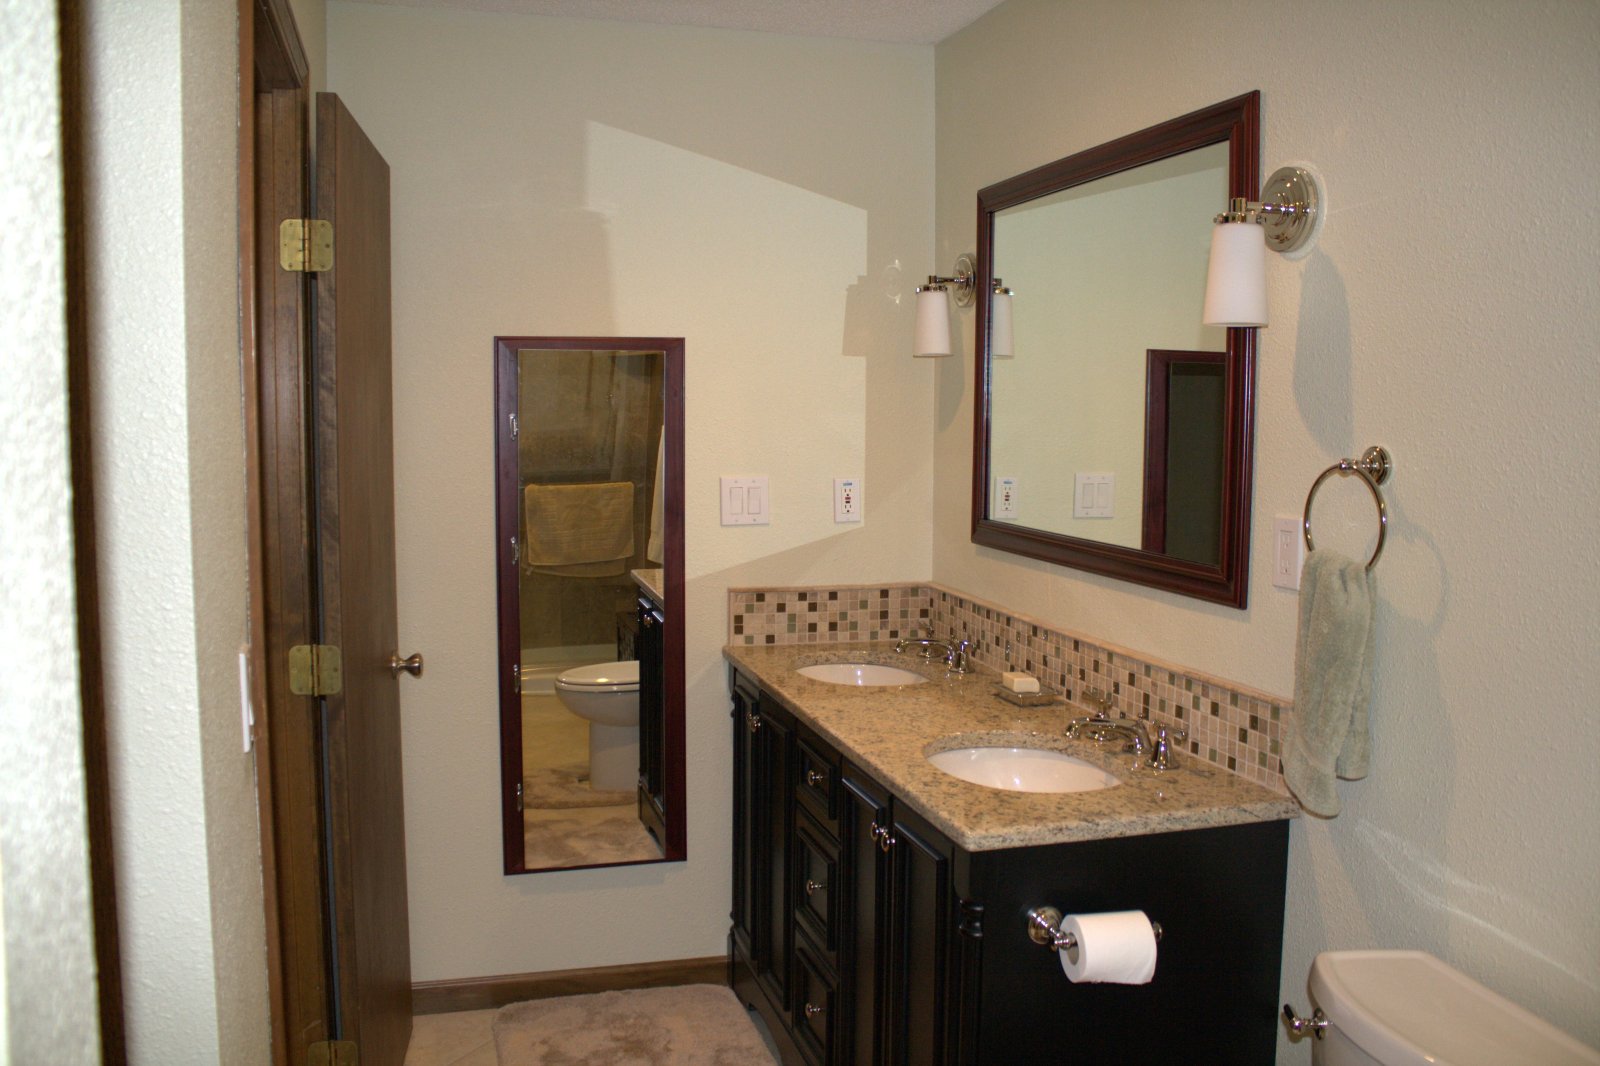 bathroom-vanity-tile-backsplash-ideas-rialno-215354